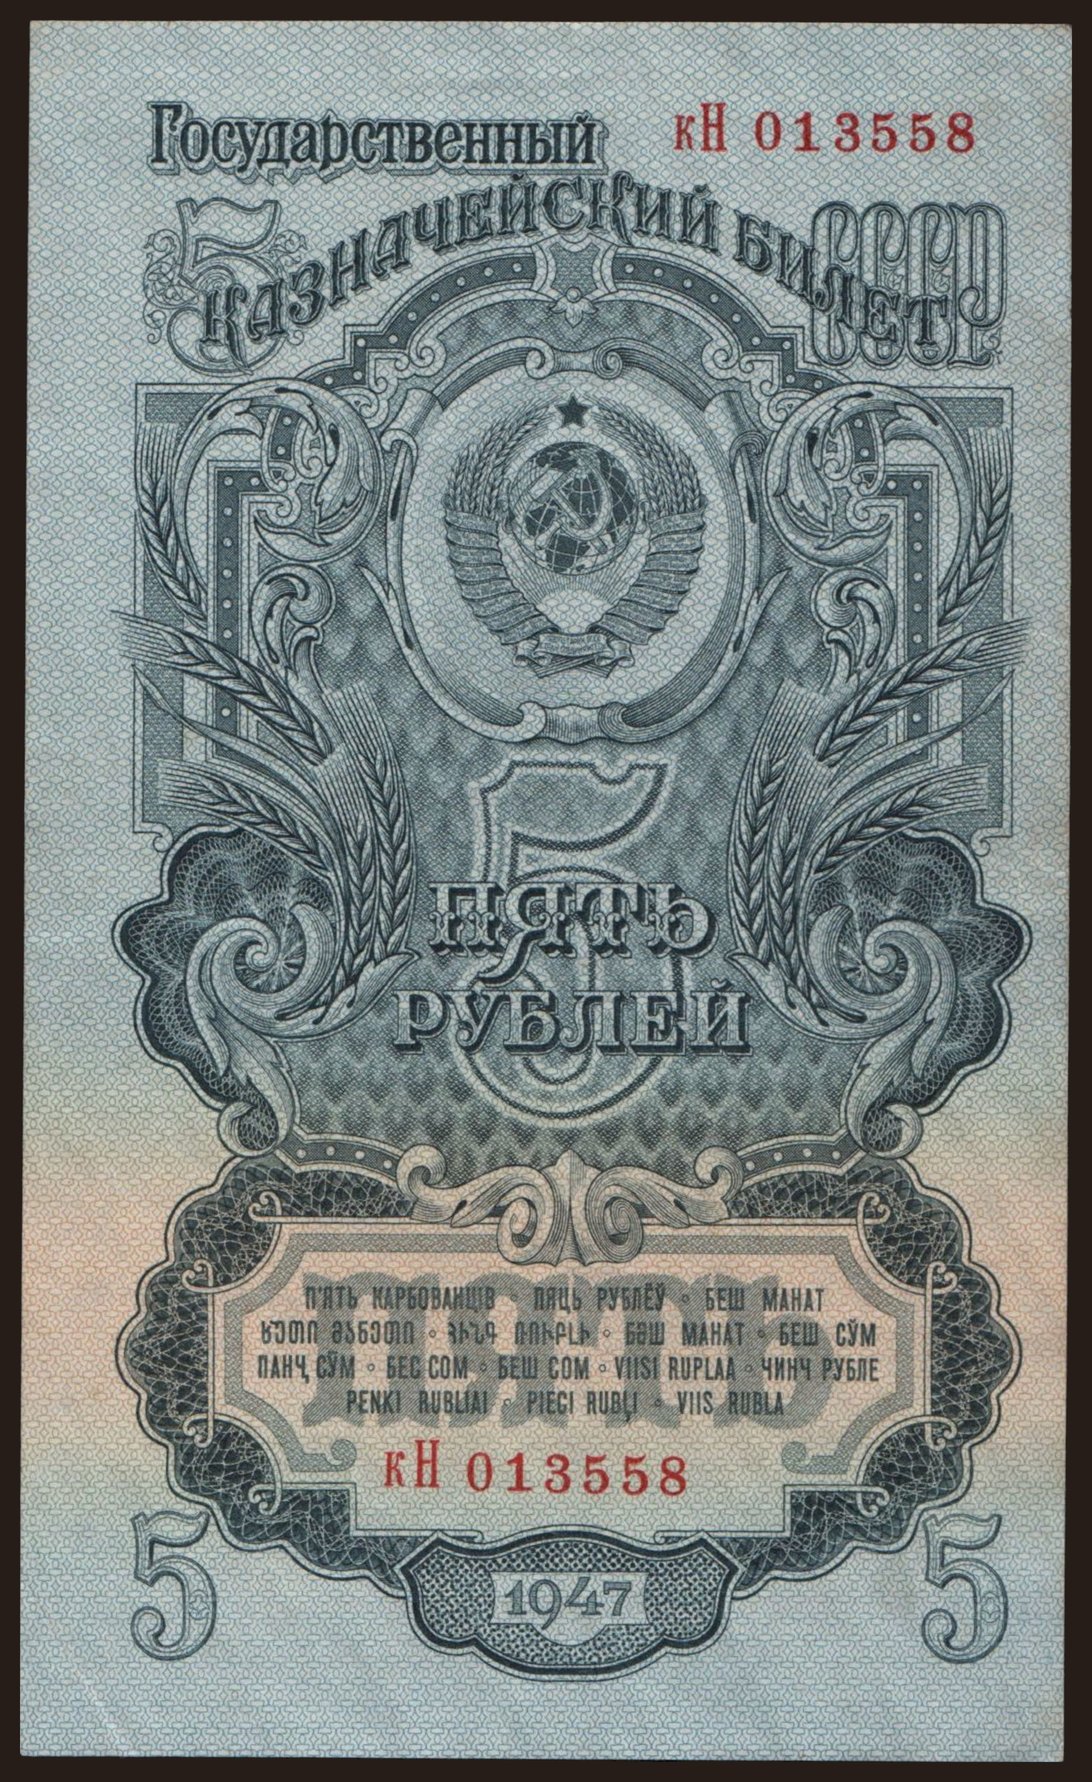 5 rubel, 1947